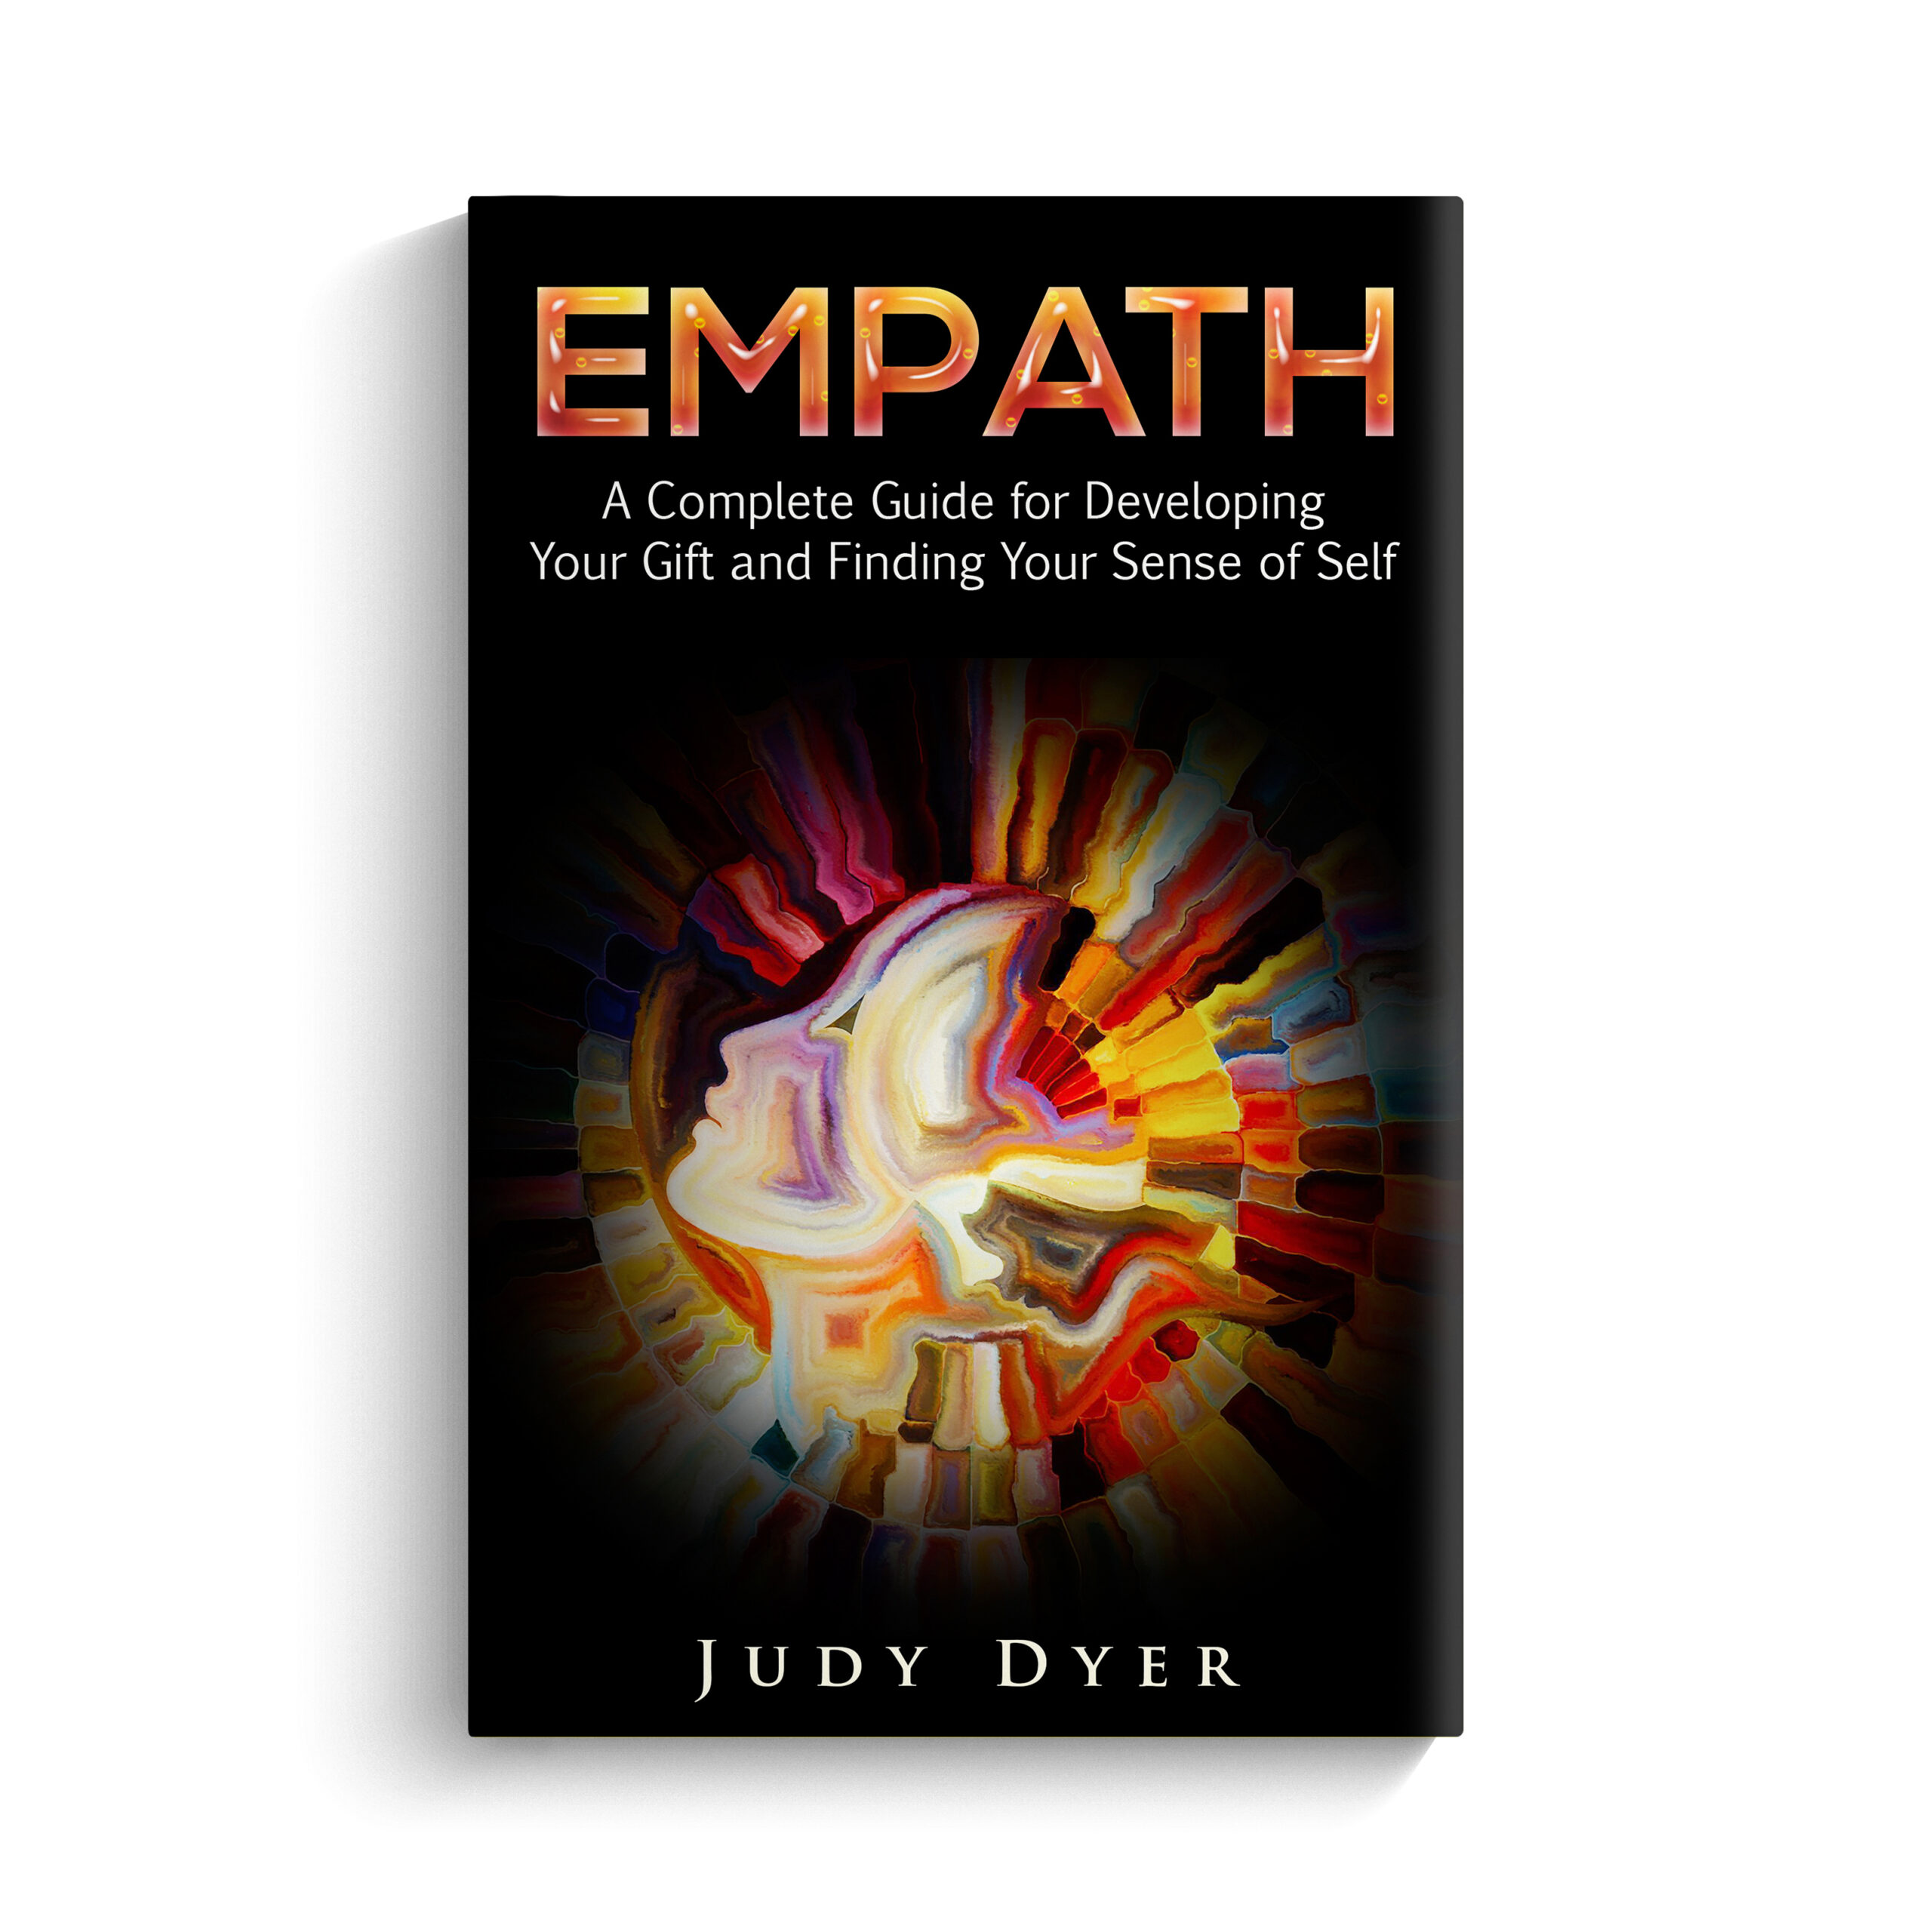 Empath by Judy Dyer